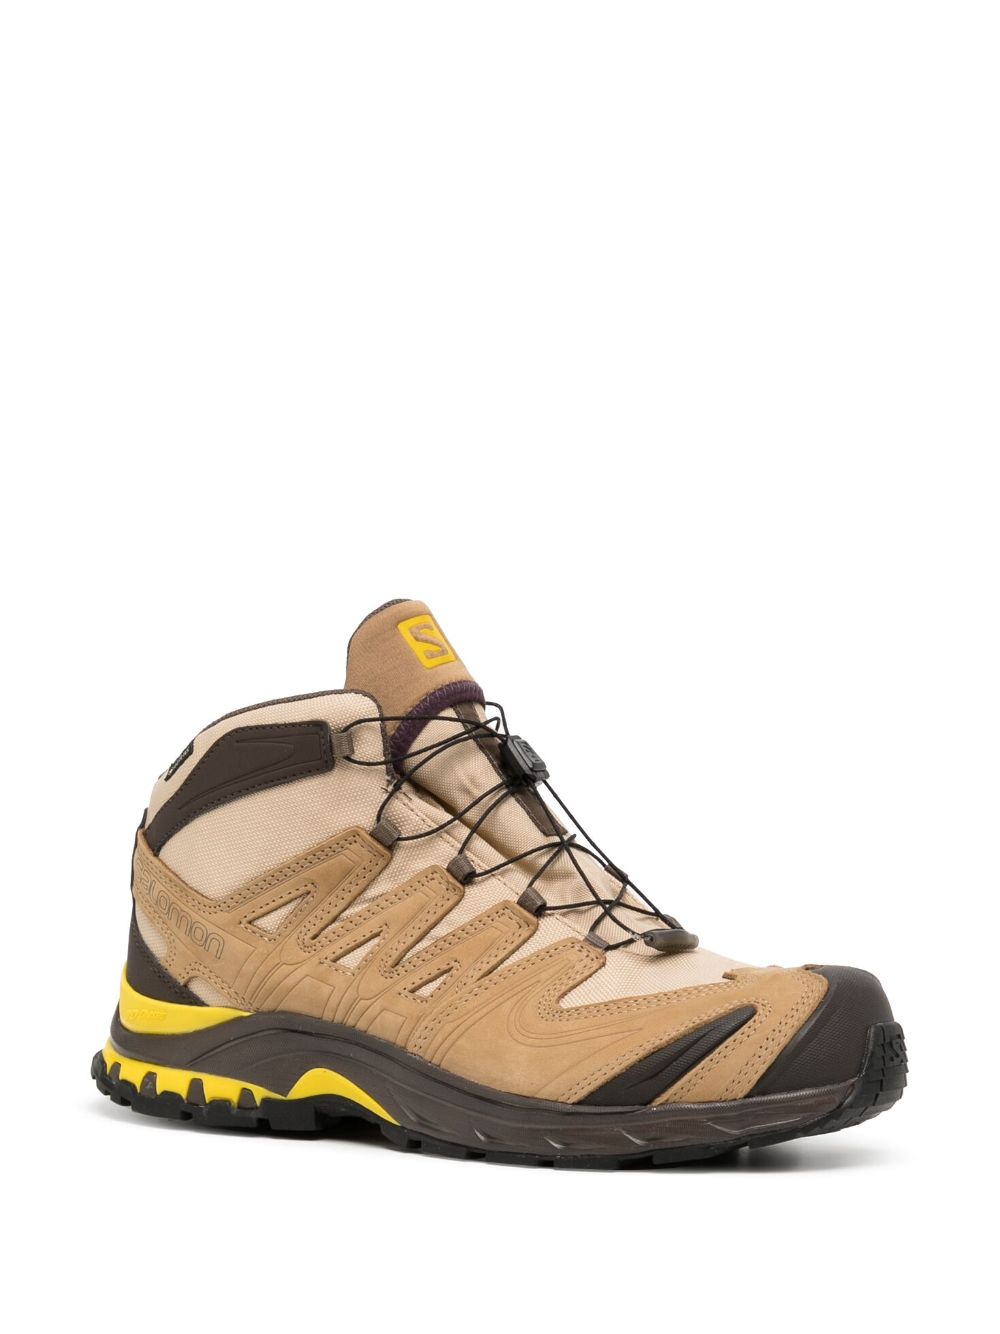 Salomon XA PRO 3D Mid GORE-TEX ankle boots - Beige